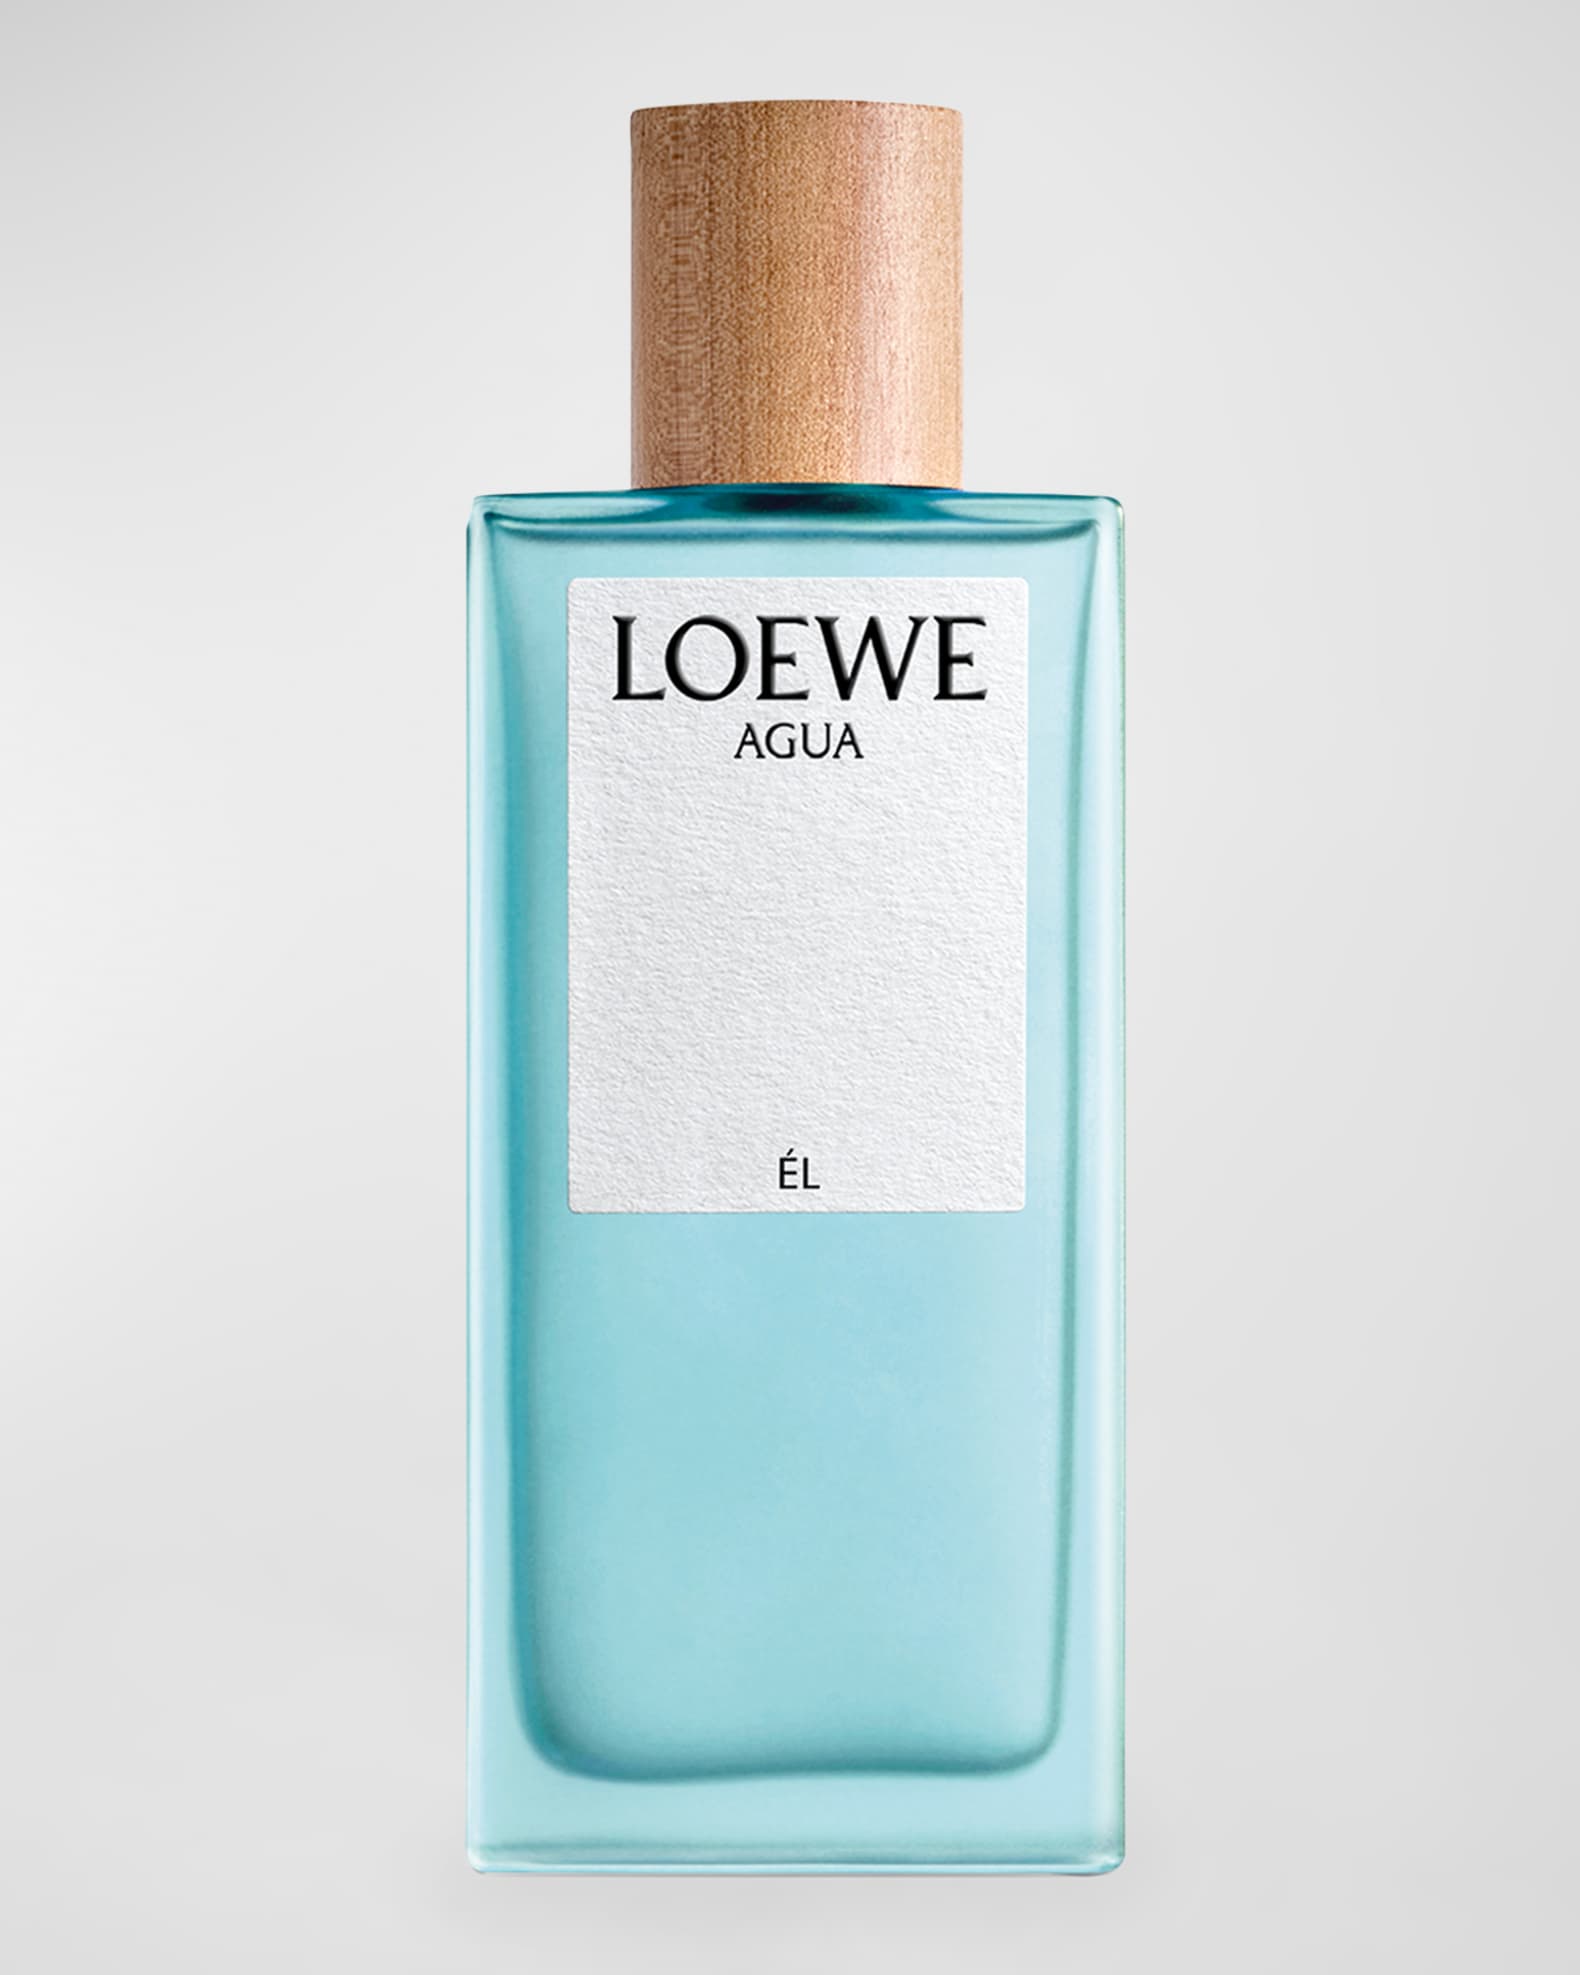 Loewe Agua El Eau de Toilette, 3.4 oz.